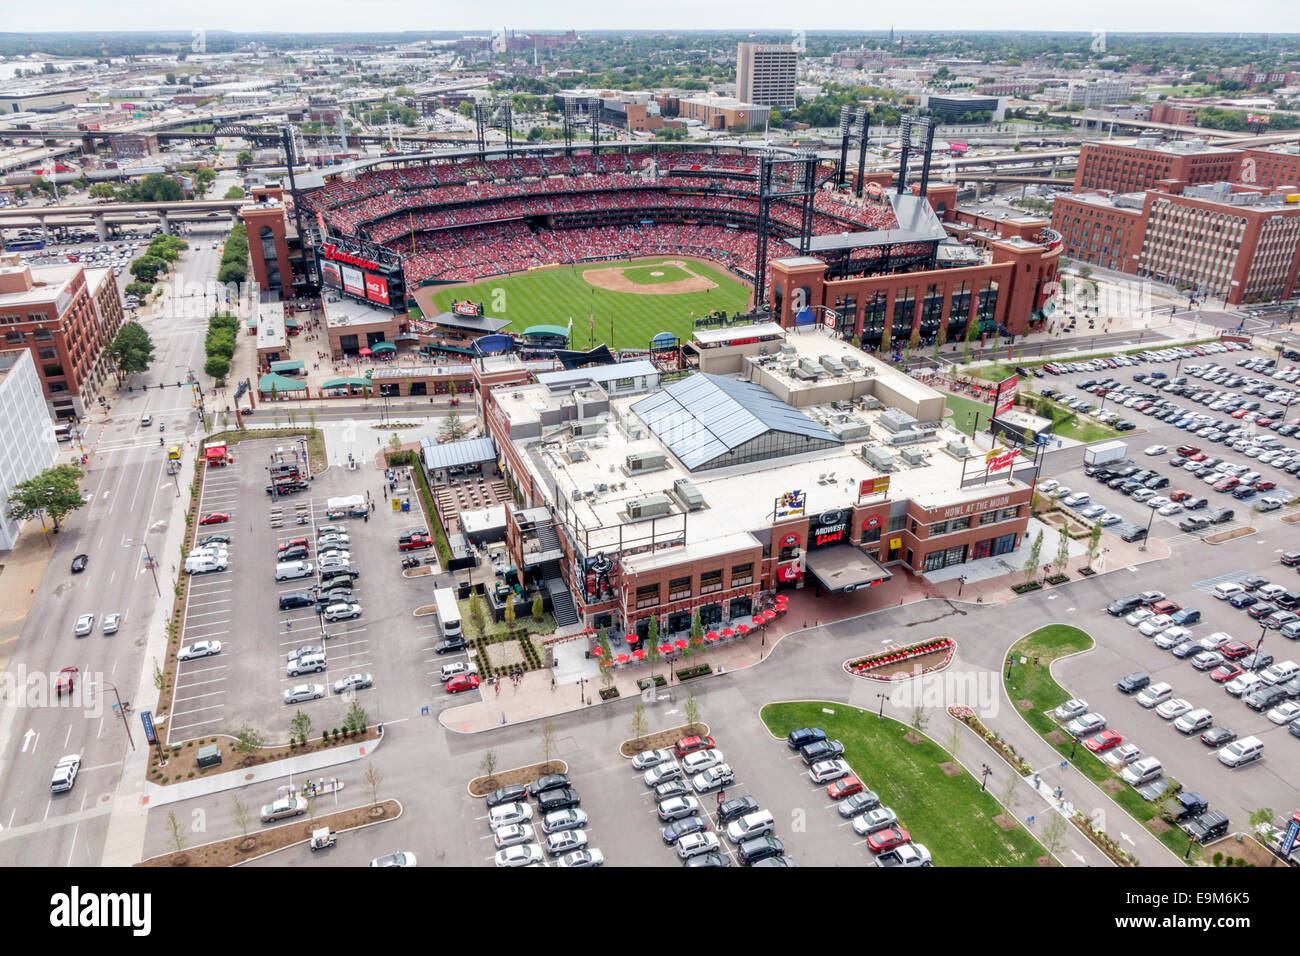 Saint St. Louis Missouri,Busch Stadium,Cardinals Hall of Fame Museum,Ballpark Village,major league baseball,game,aerial overhead view from above,view, Stock Photo